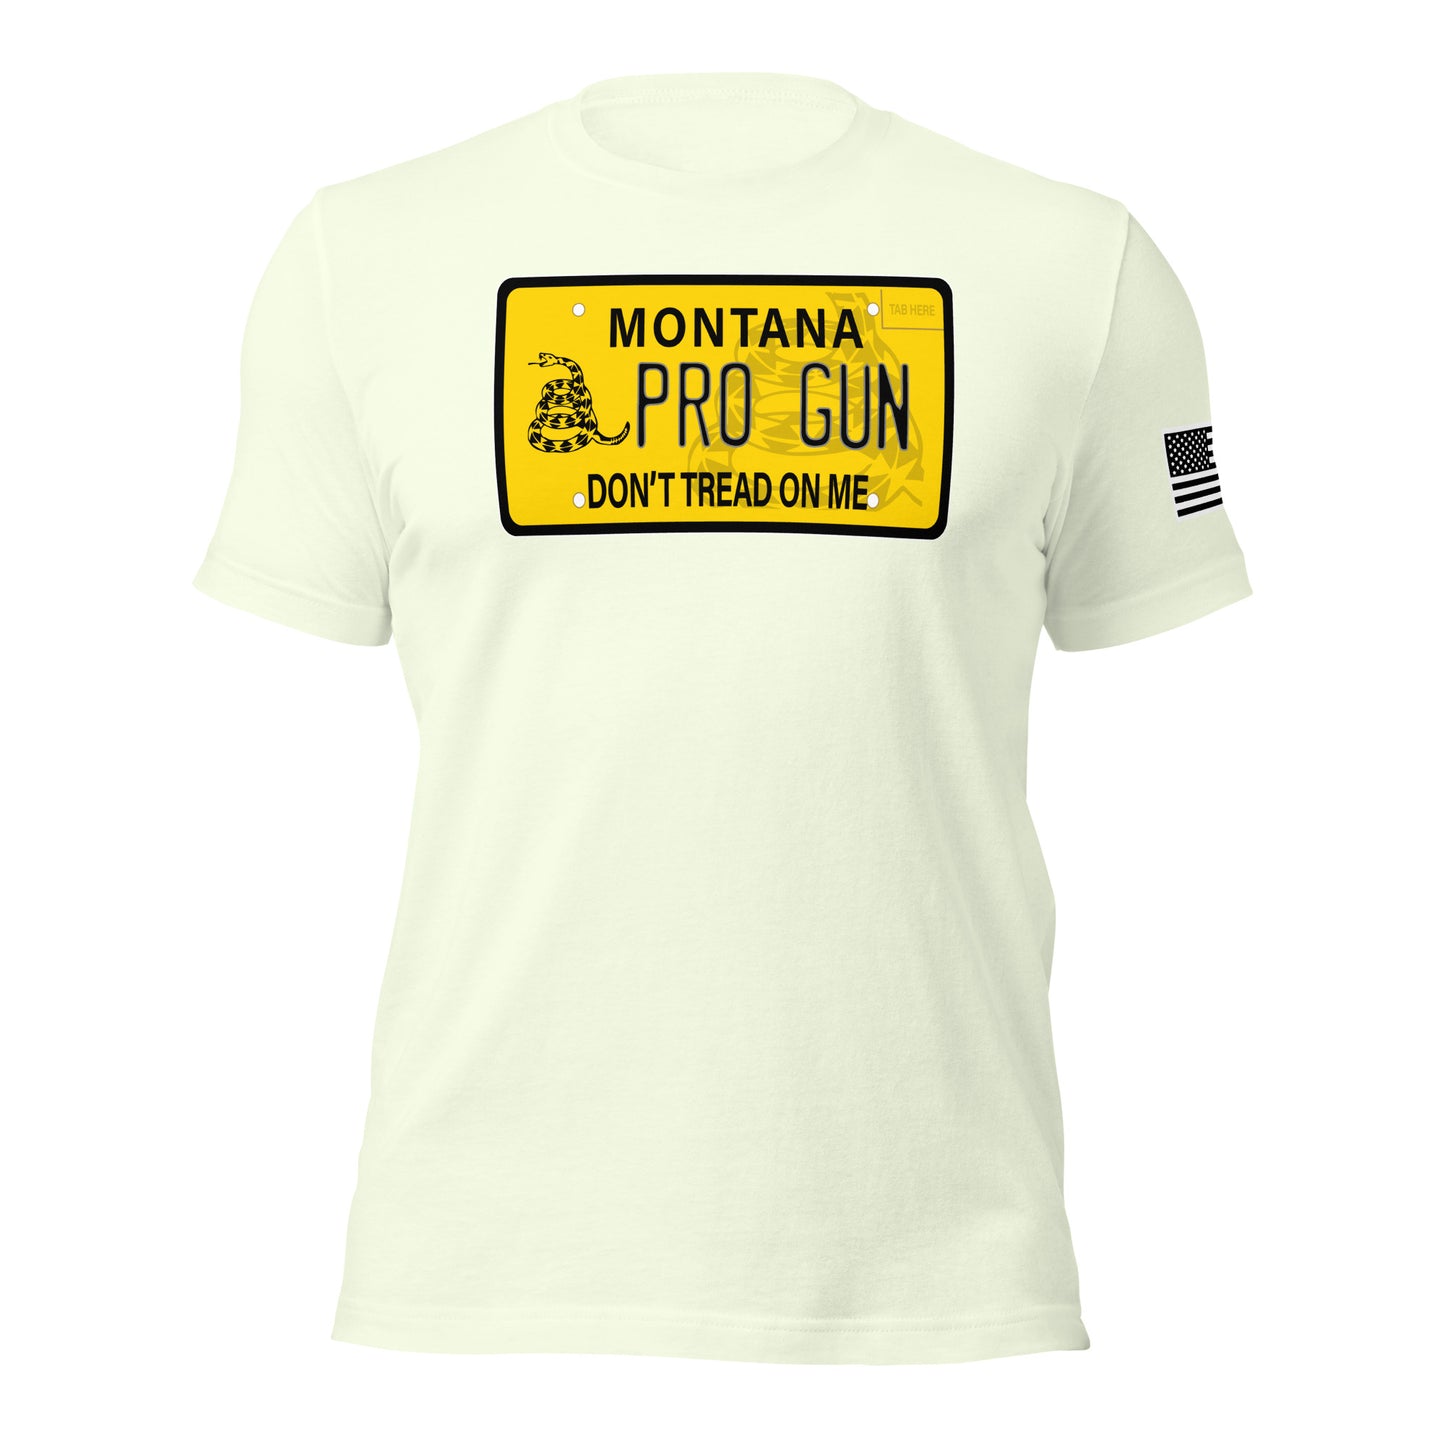 MONTANA DON'T TREAD ON ME PLATE - PRO GUN - BELLA+CANVAS - Unisex t-shirt